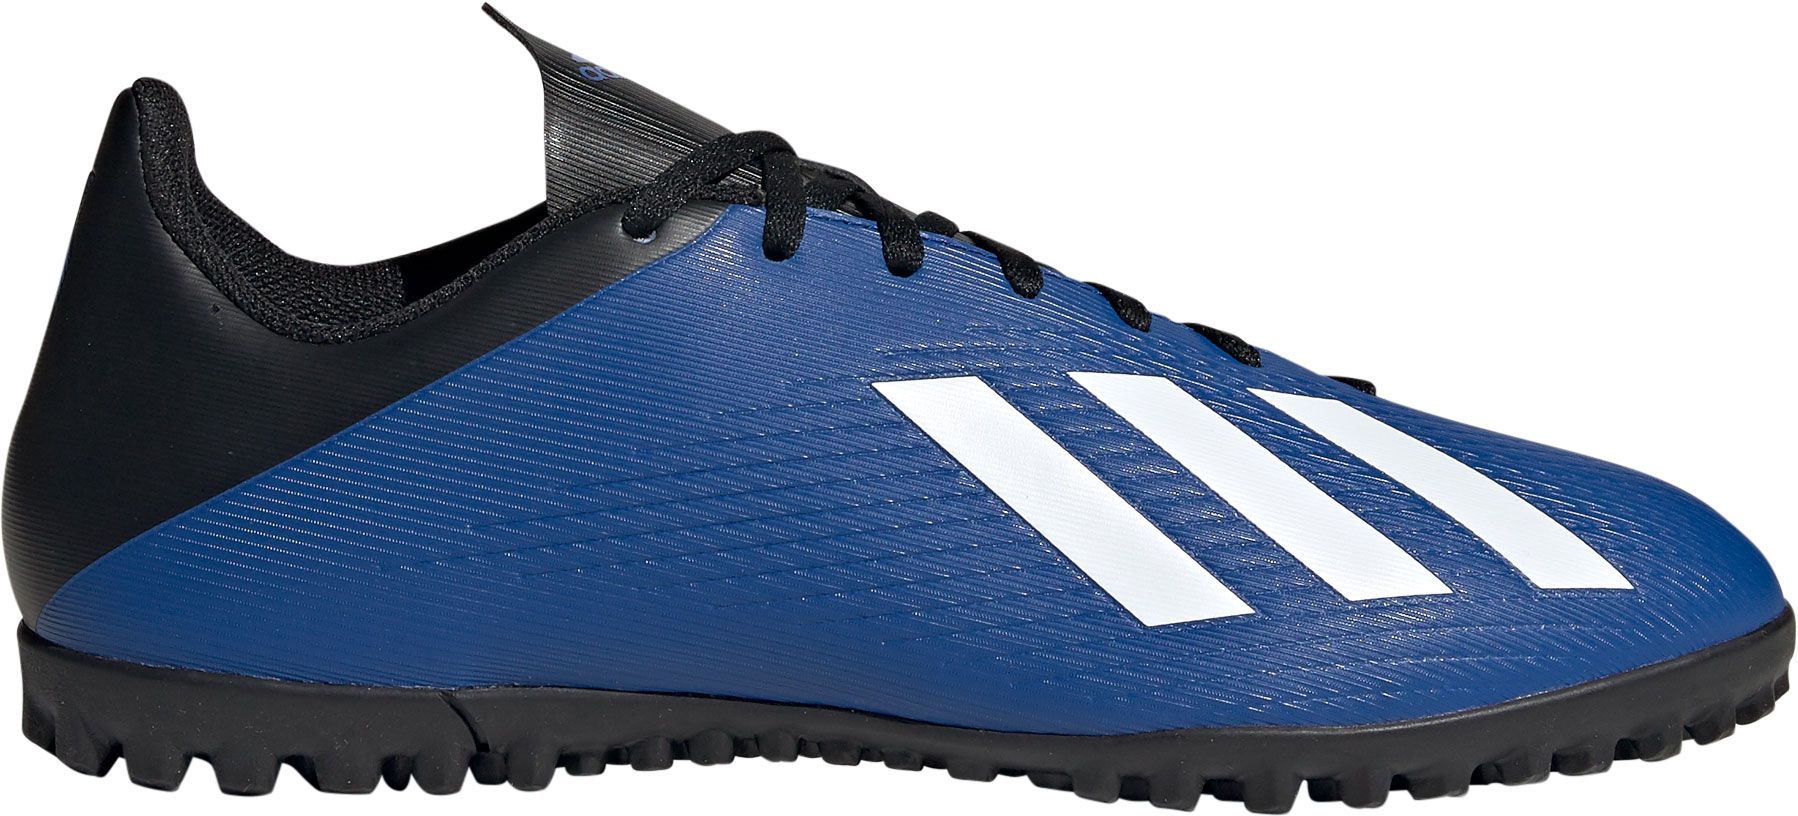 adidas x turf soccer shoes